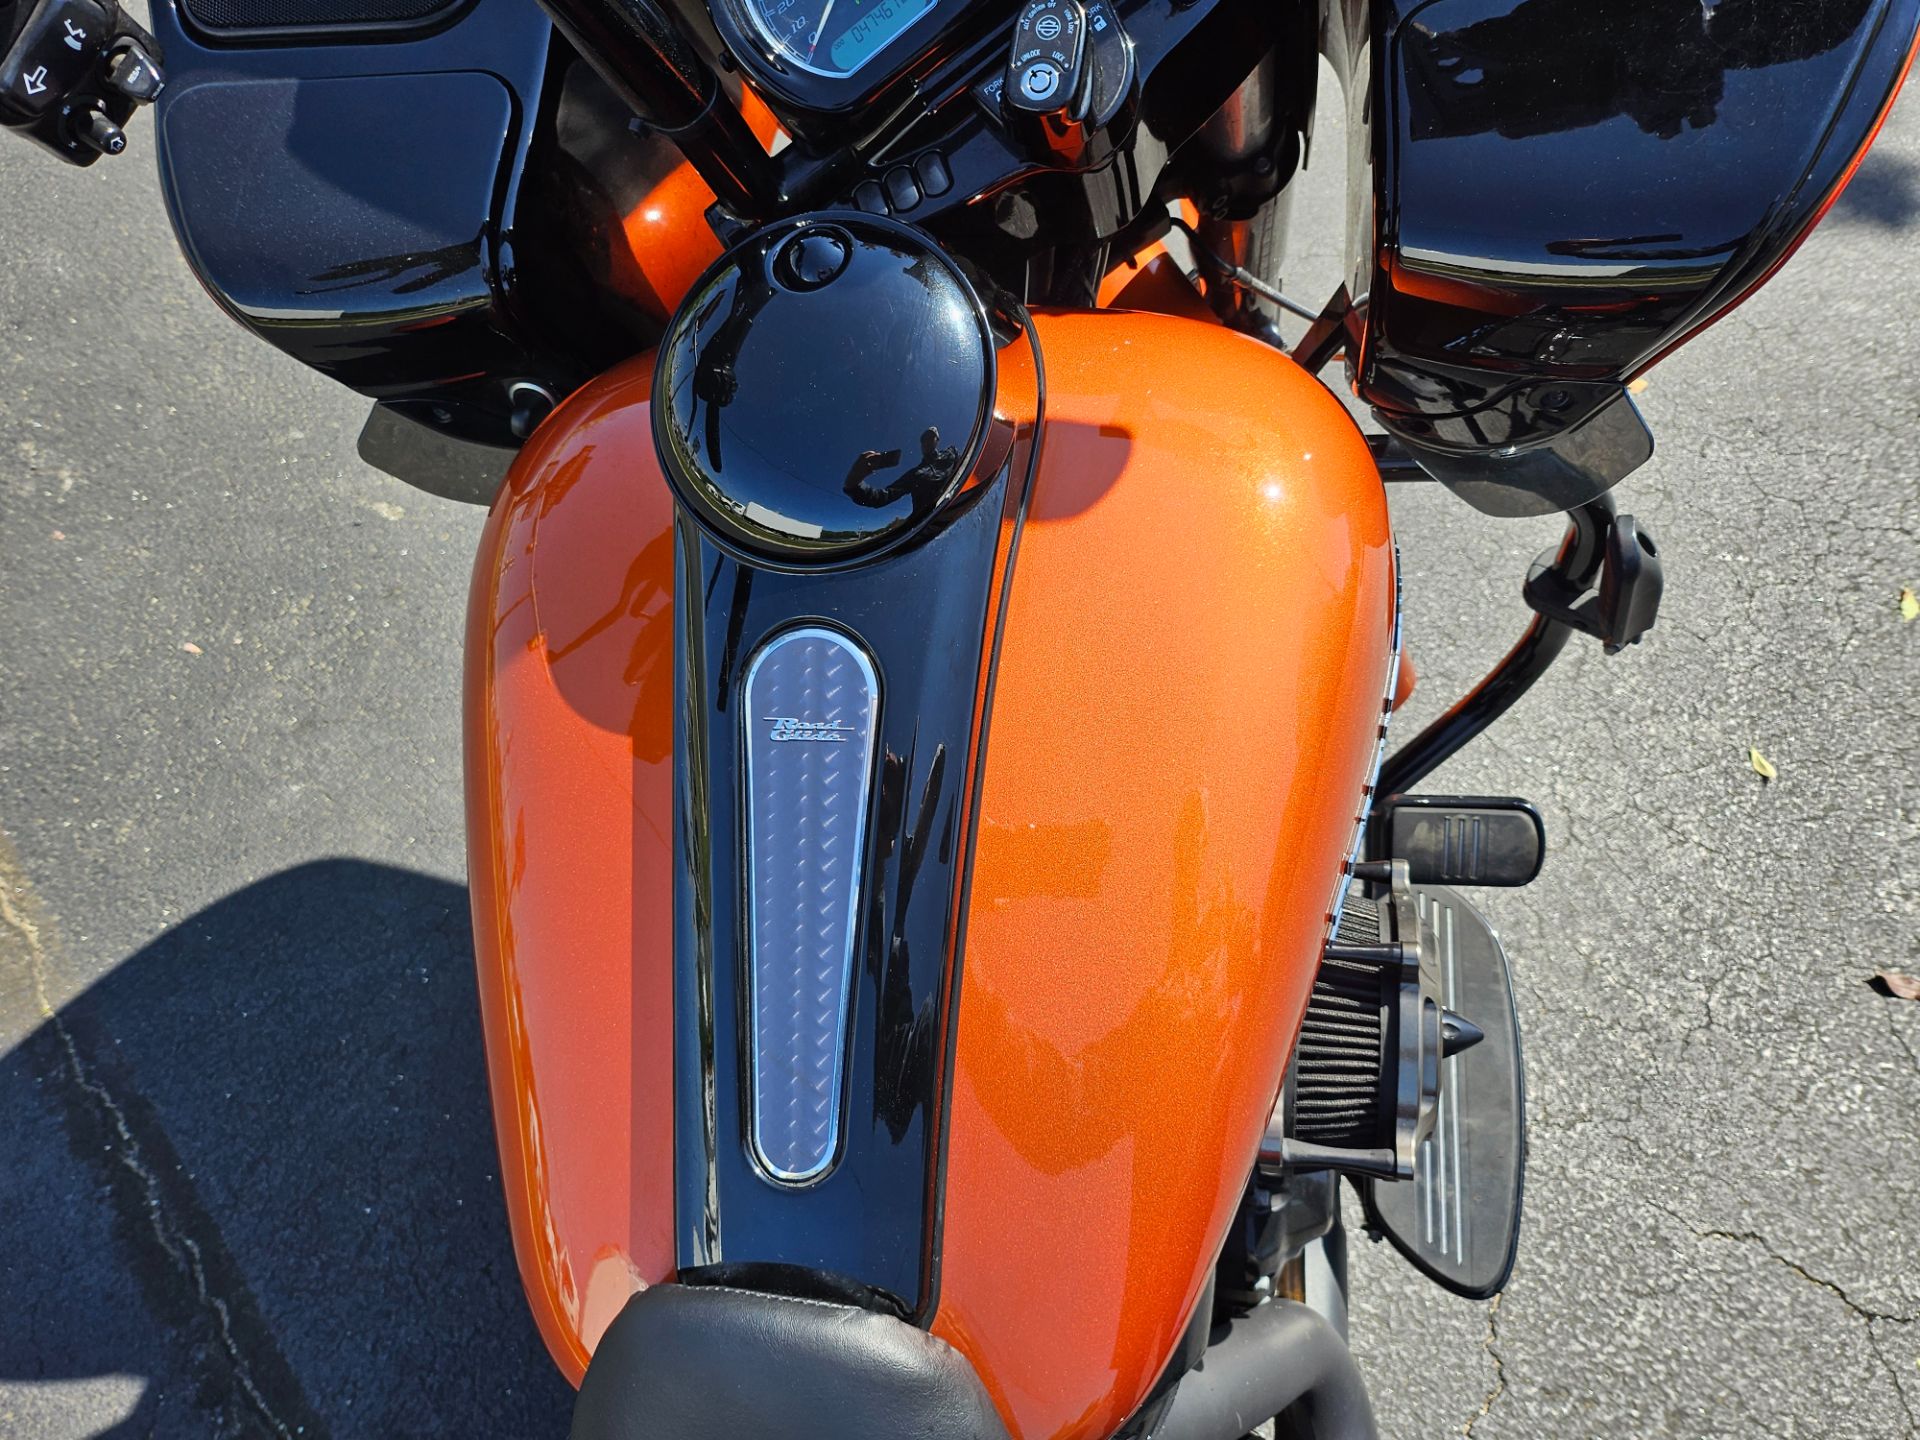 2020 Harley-Davidson Road Glide® Special in Lynchburg, Virginia - Photo 30